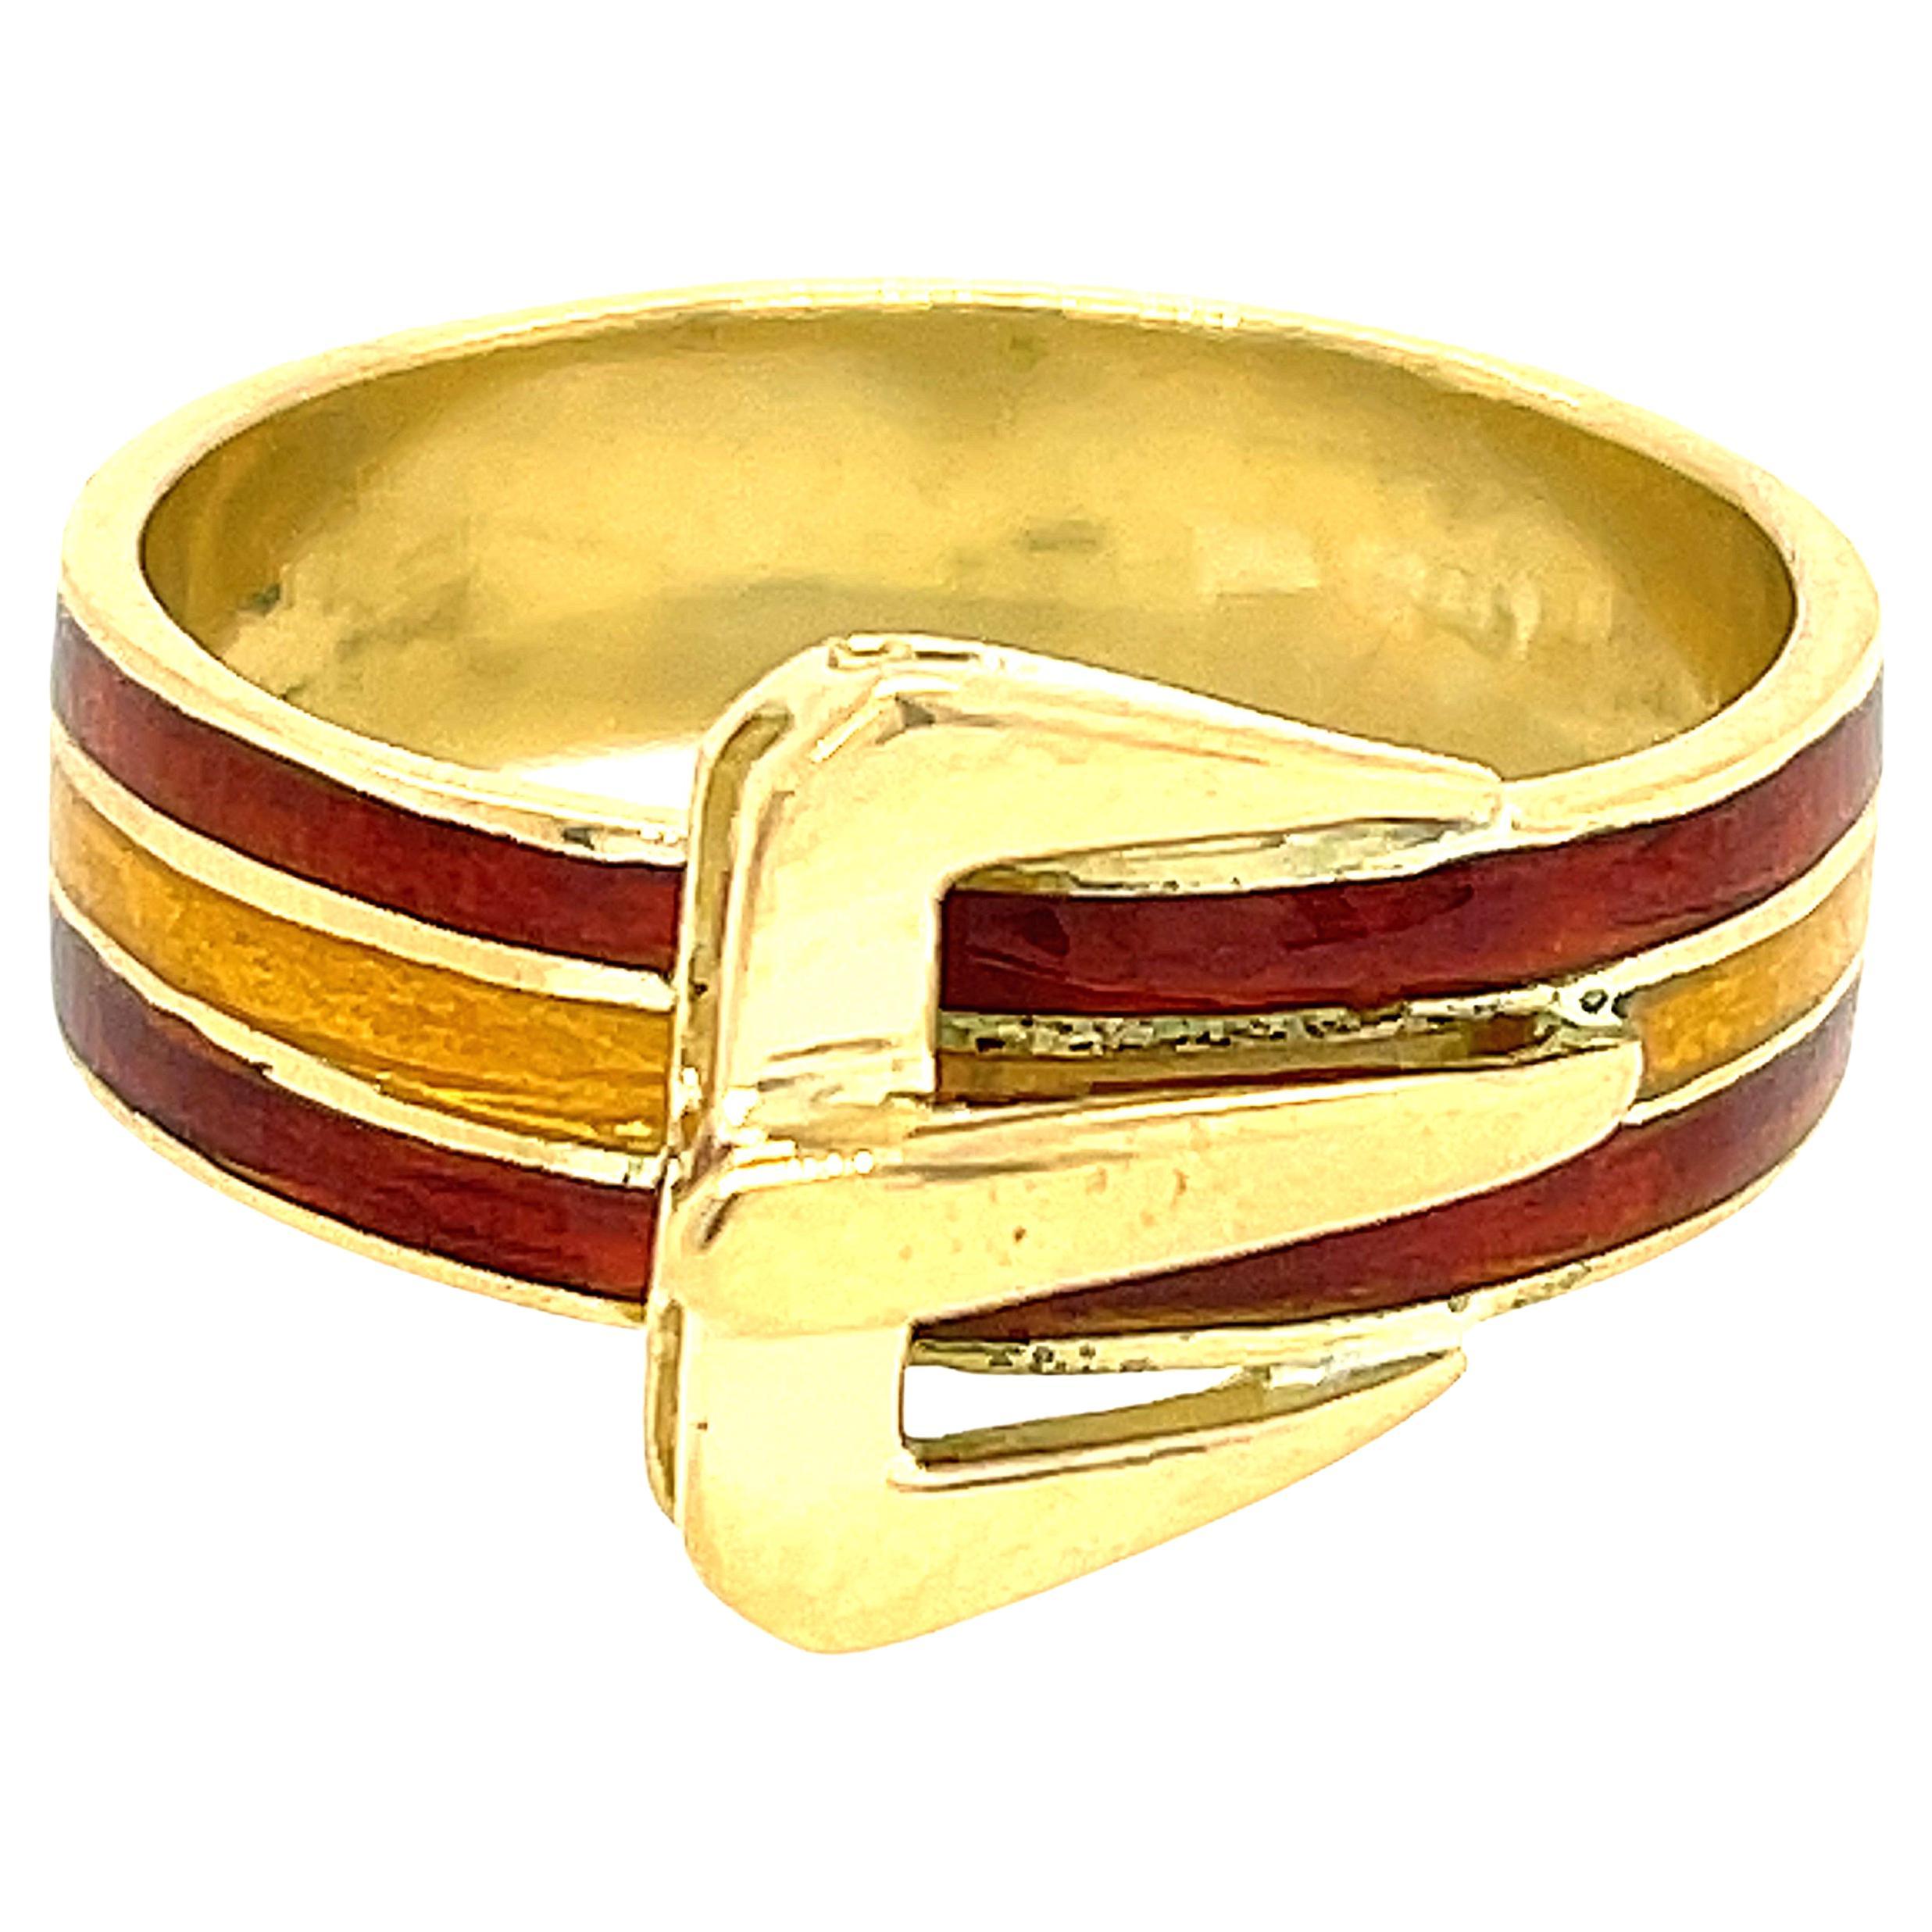 Vintage Gucci Enamel 18 Karat Gold Buckle Ring